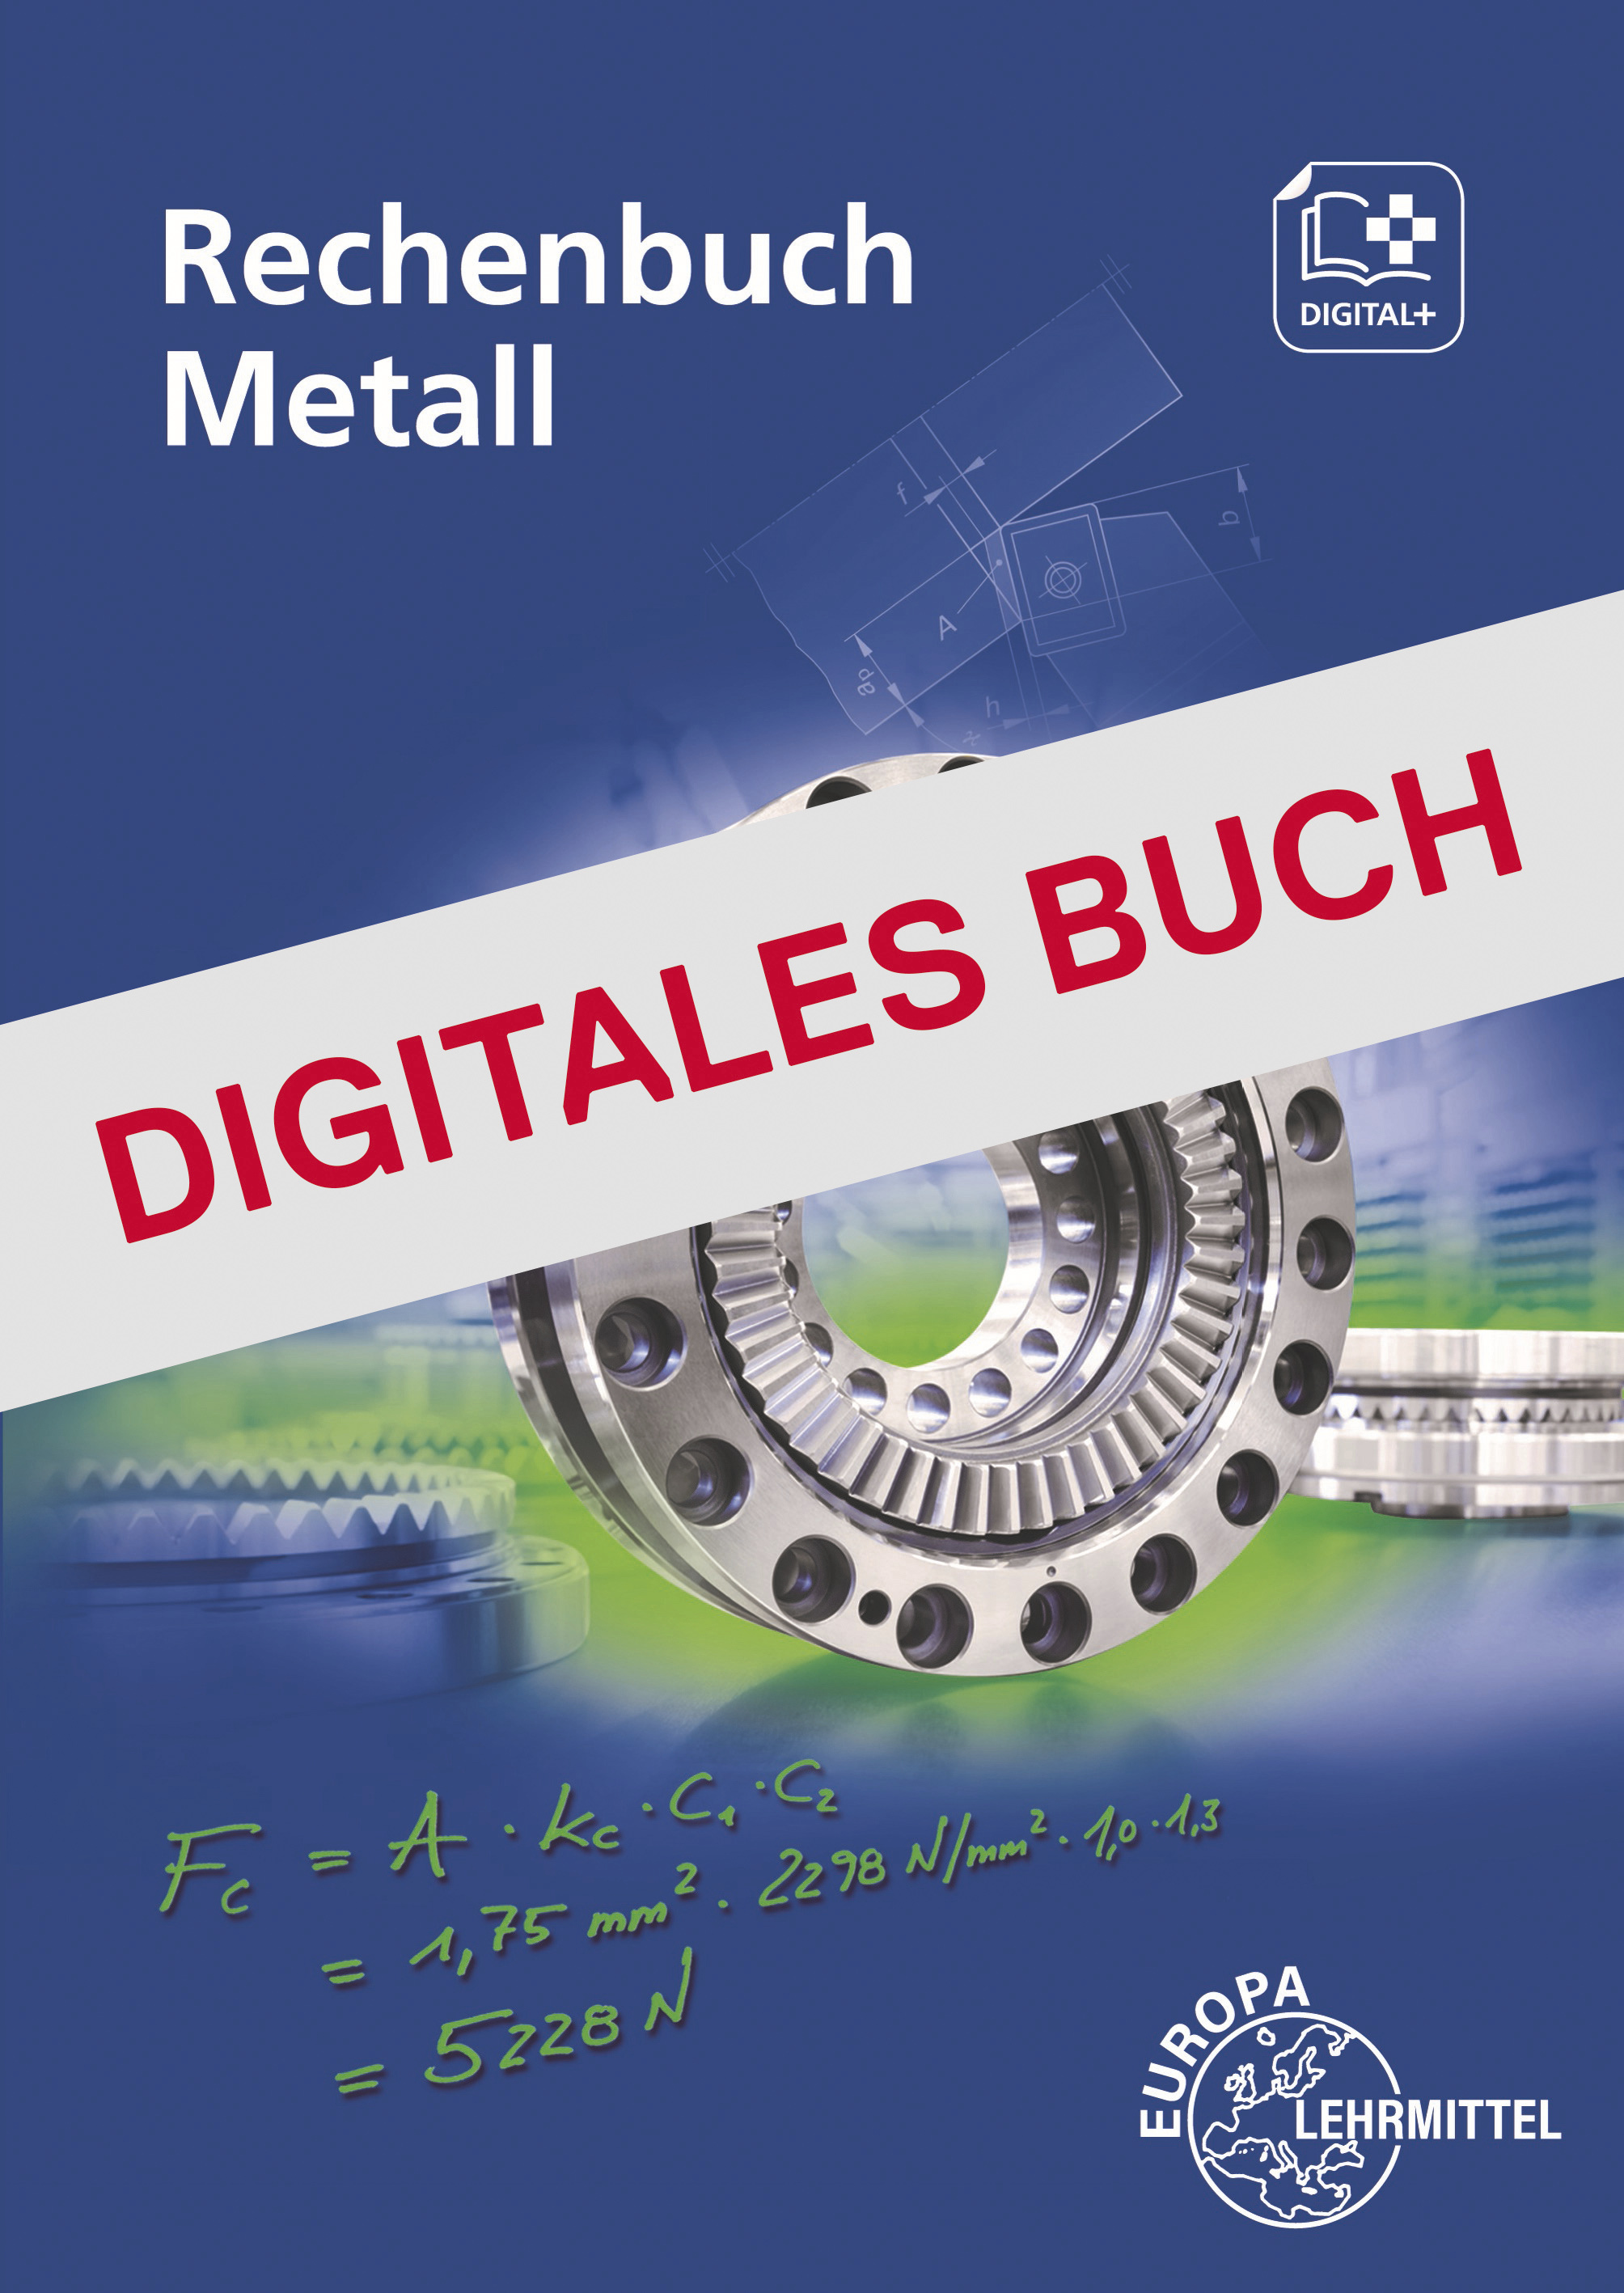 Rechenbuch Metall - Digitales Buch